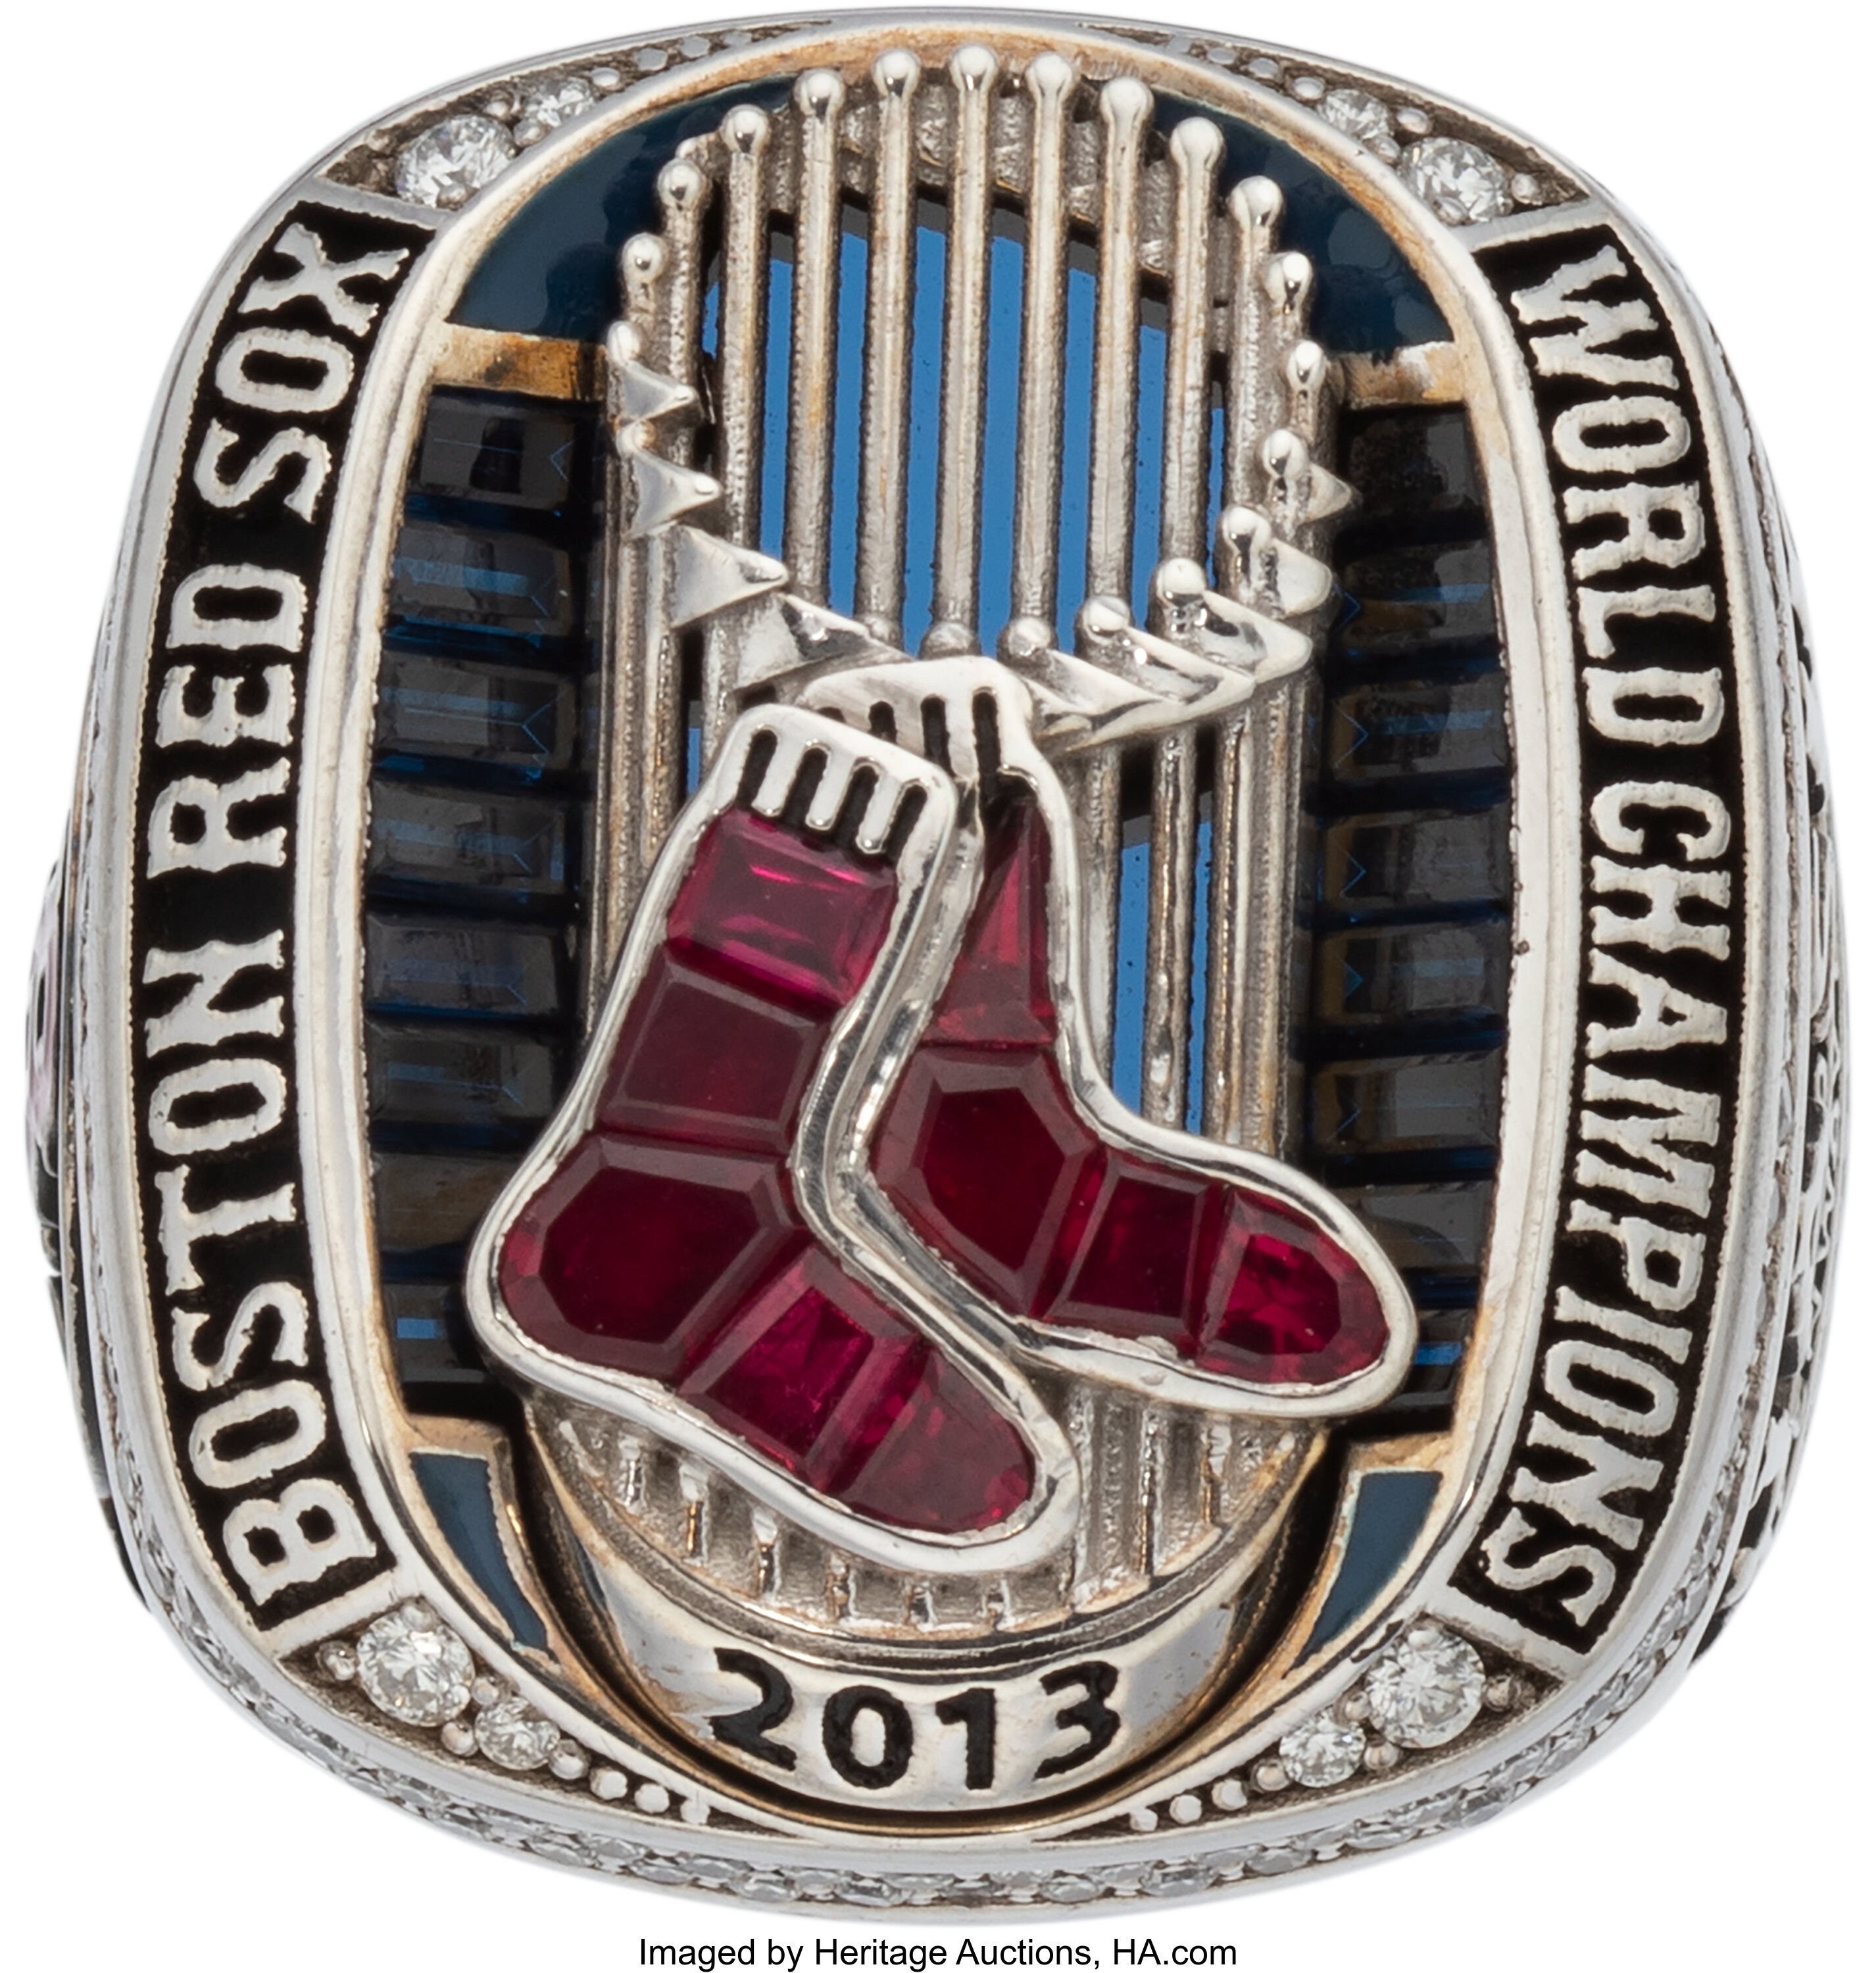 2013 Boston Red Sox World Series Championship Ring. Baseball